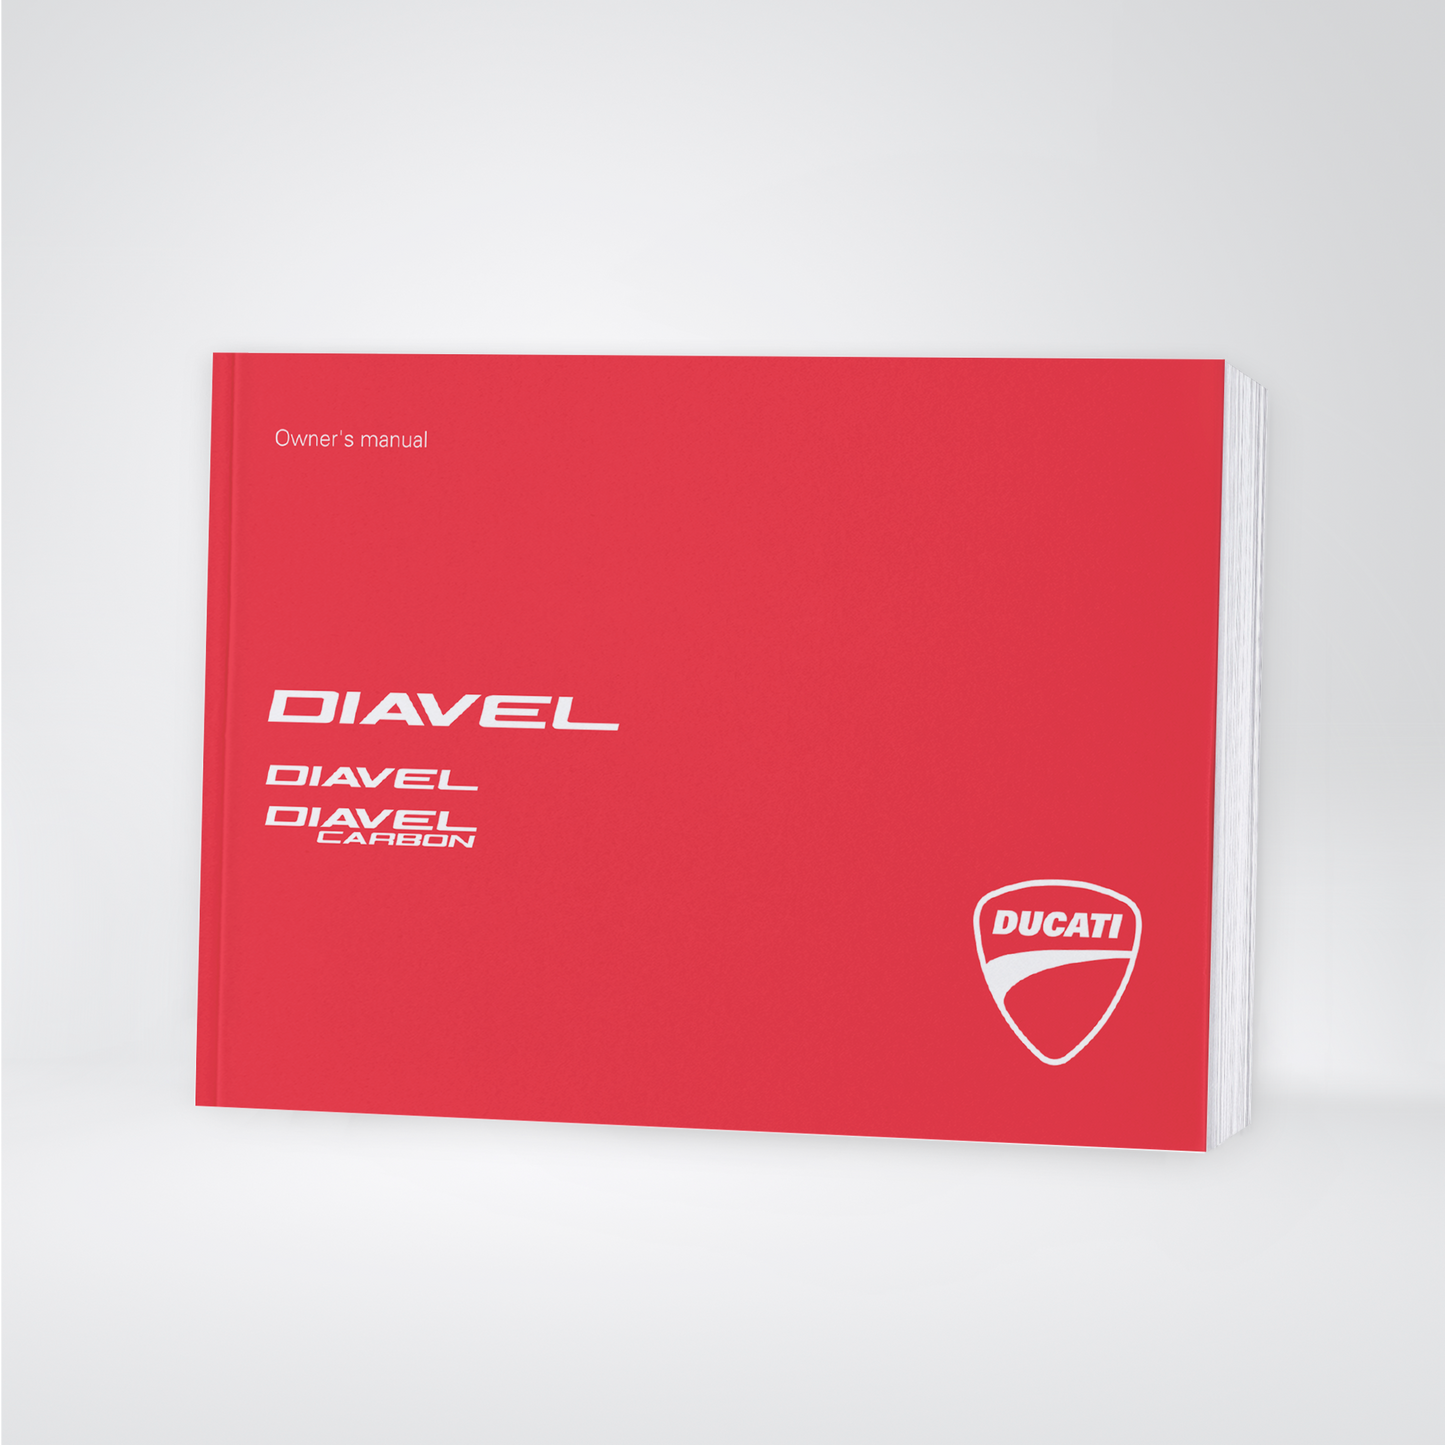 2015 Ducati Diavel/Diavel Carbon Bedienungsanleitung | Englisch